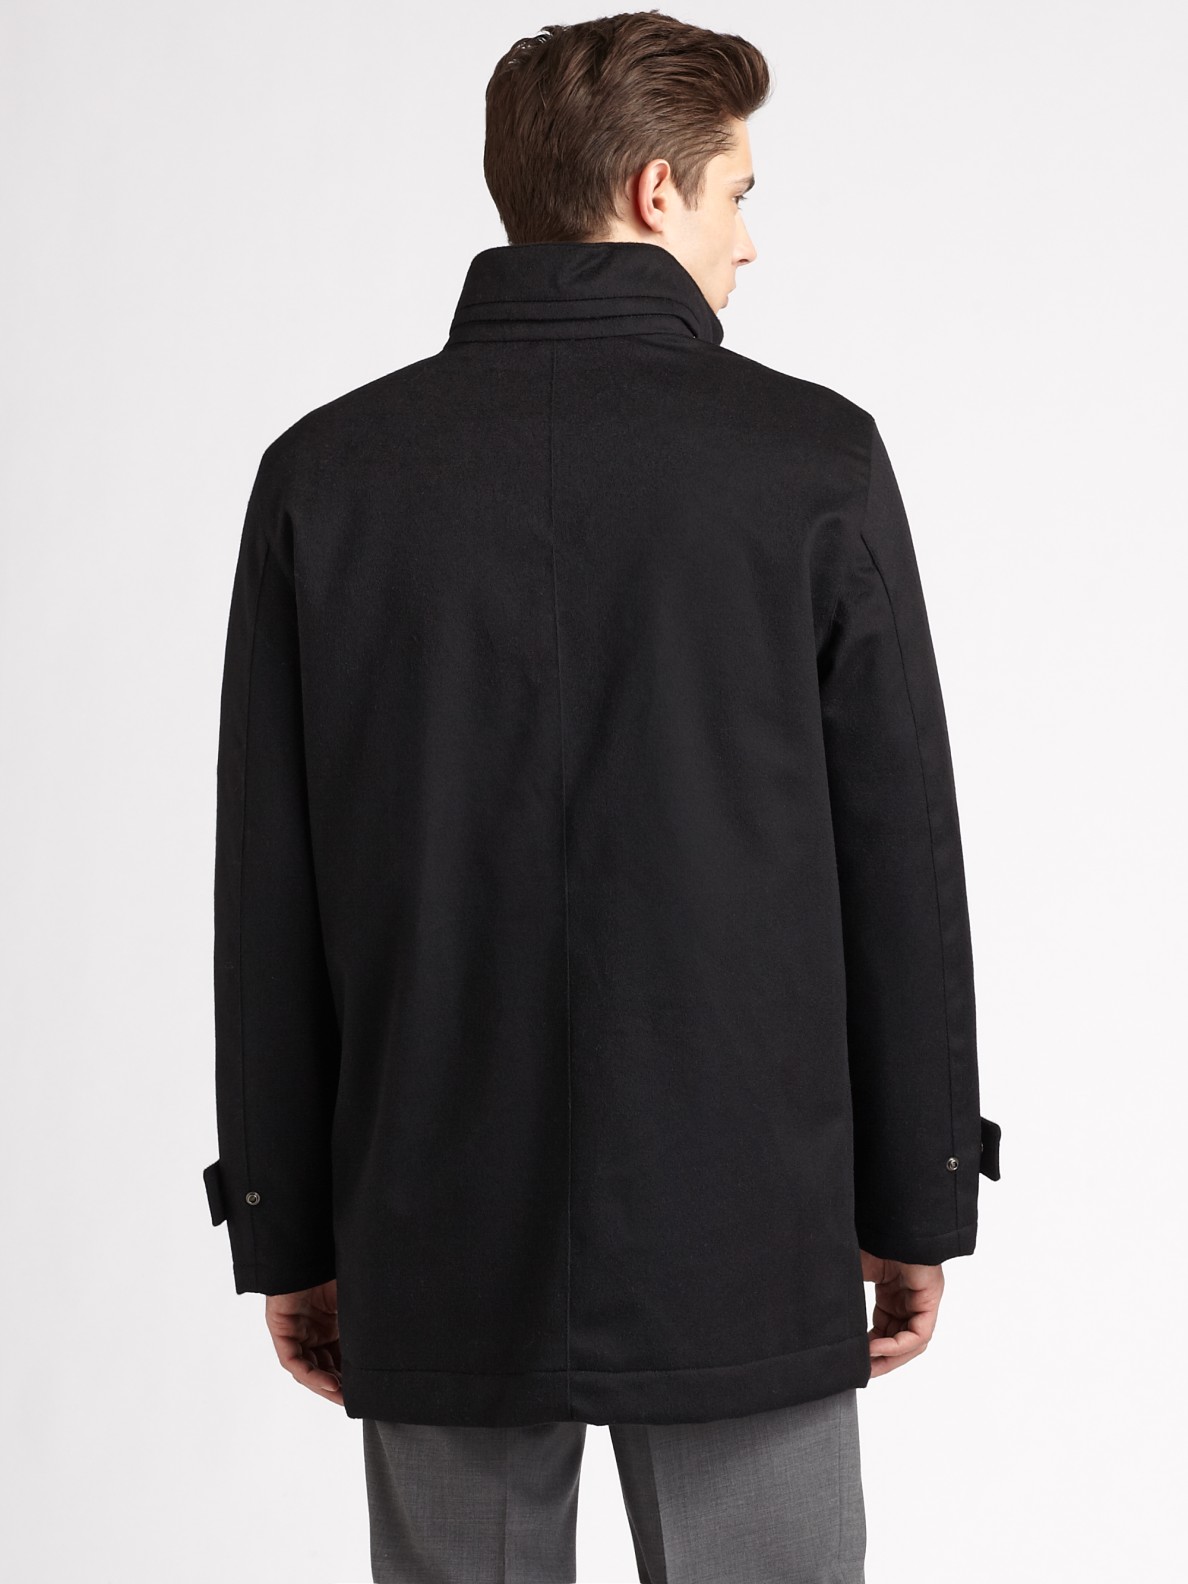 Lyst - Ferragamo Wool/cashmere Car Coat in Black for Men